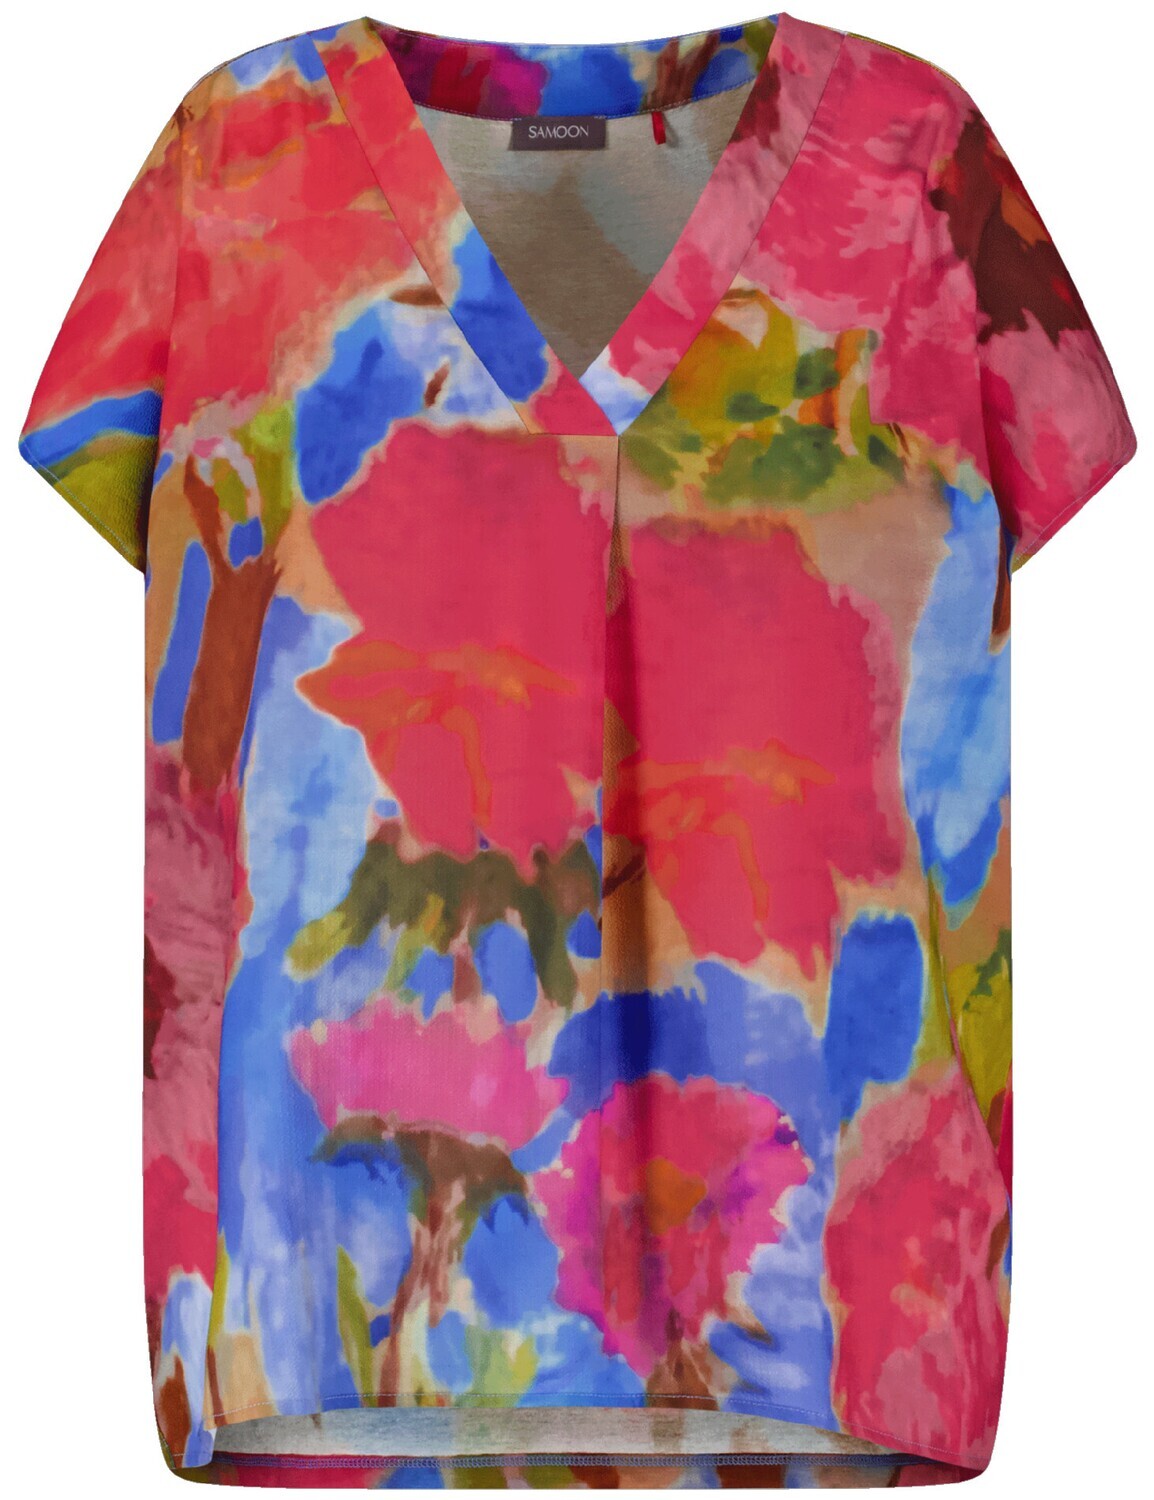 Samoon blouse print 471021-26103, Size: 44